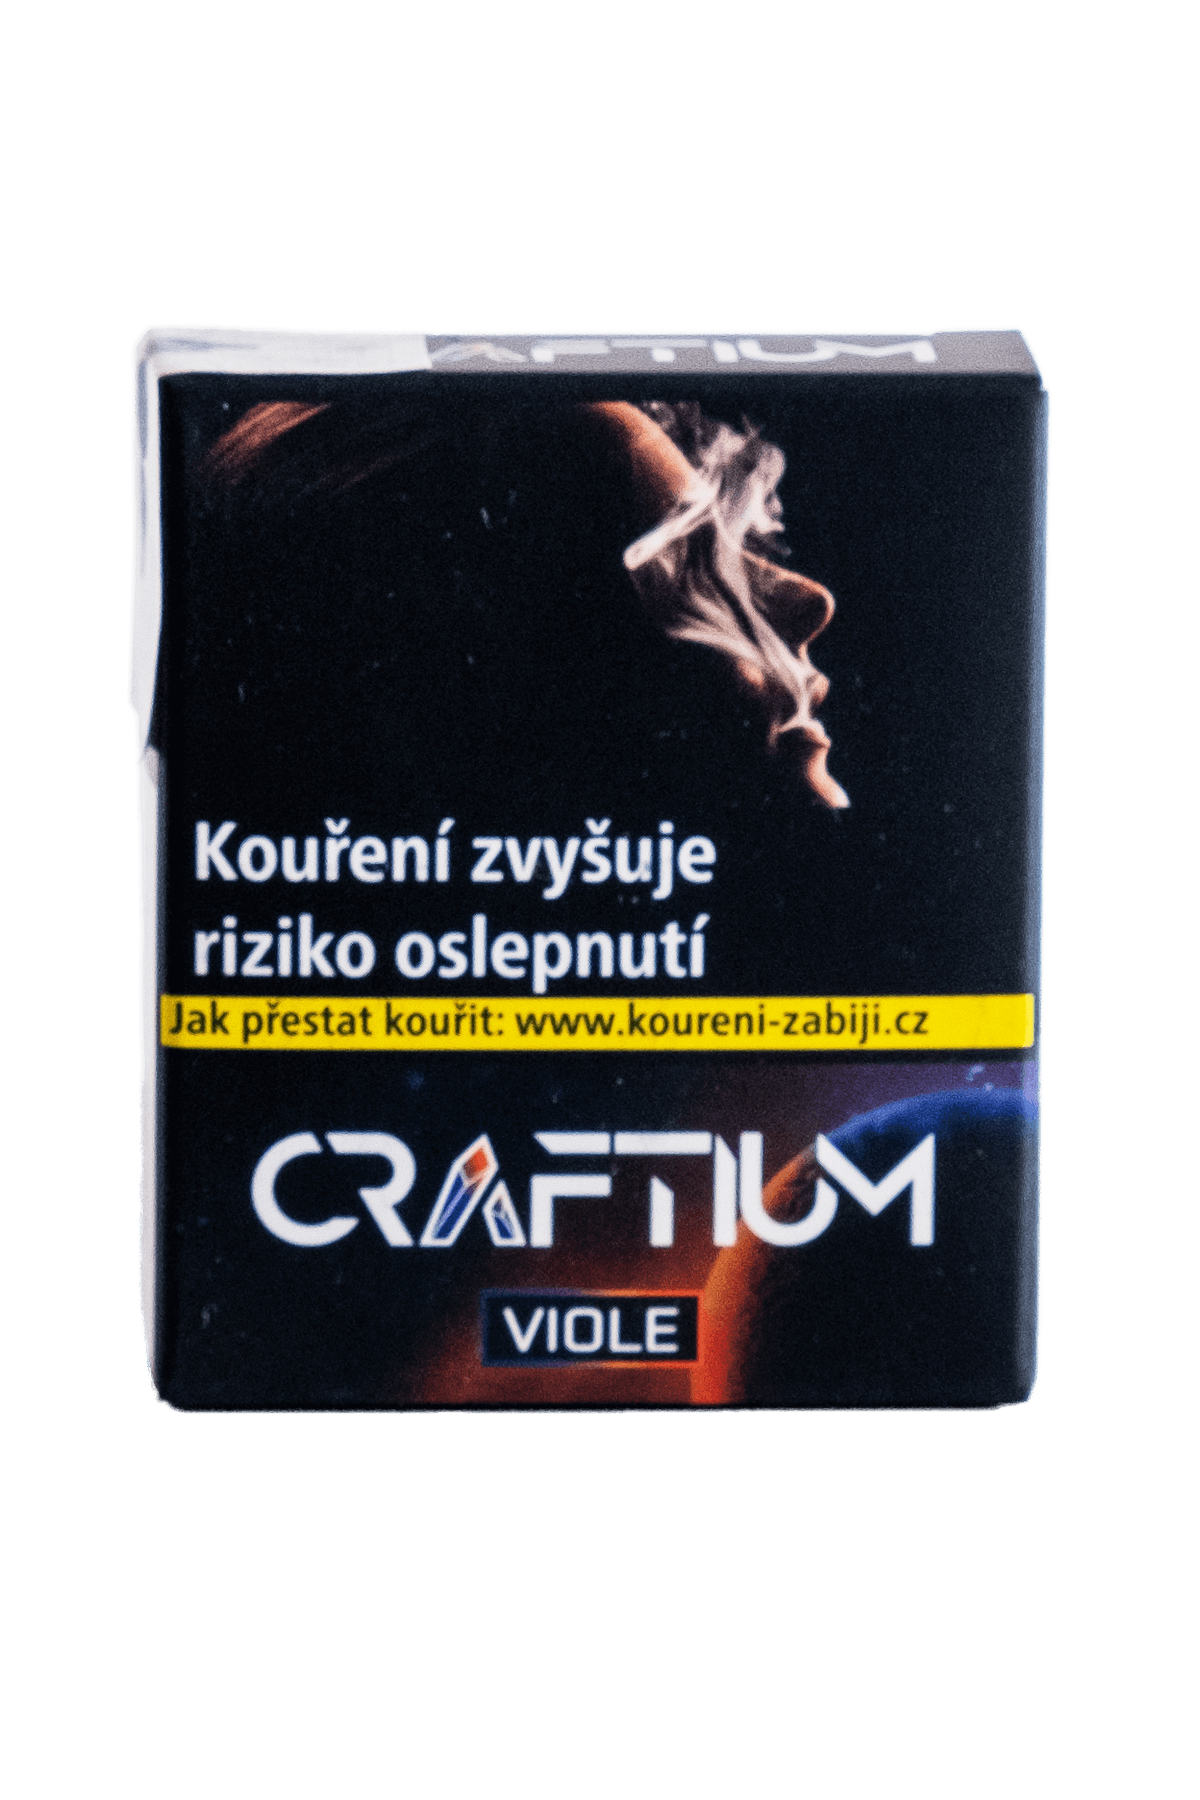 Tabák - Craftium 20g - Viole